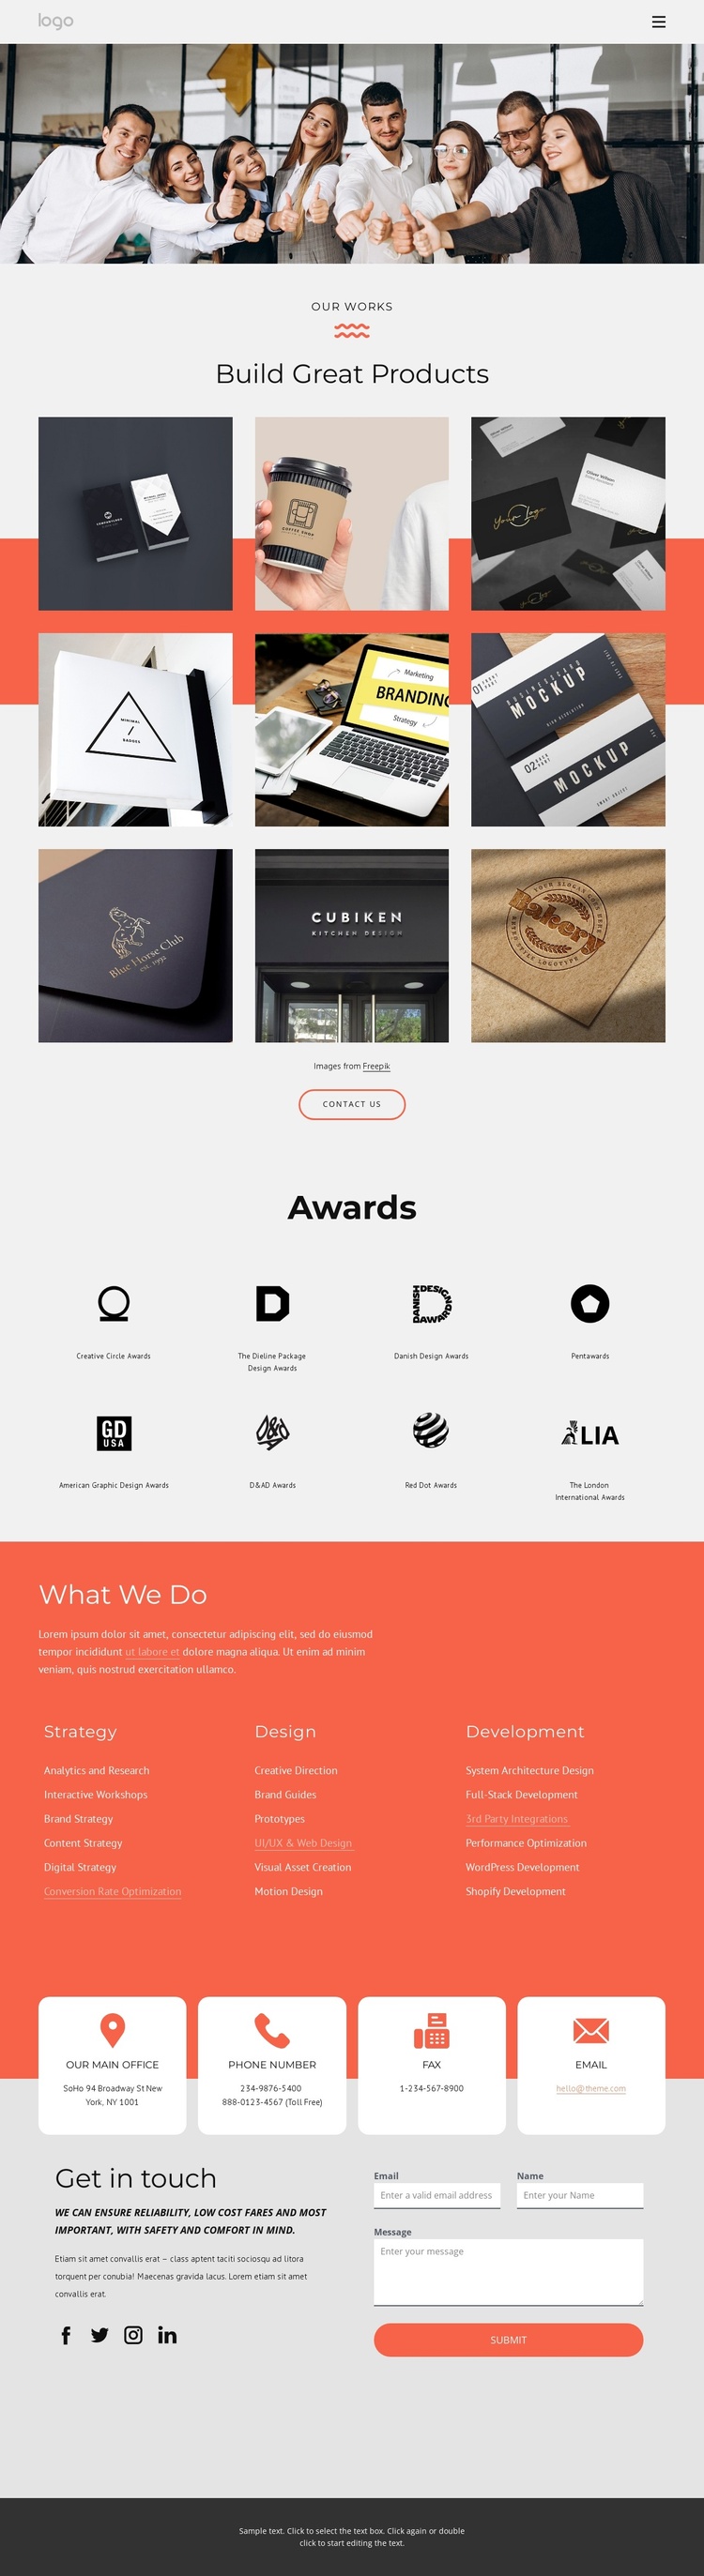 Award winning branding services Joomla Template